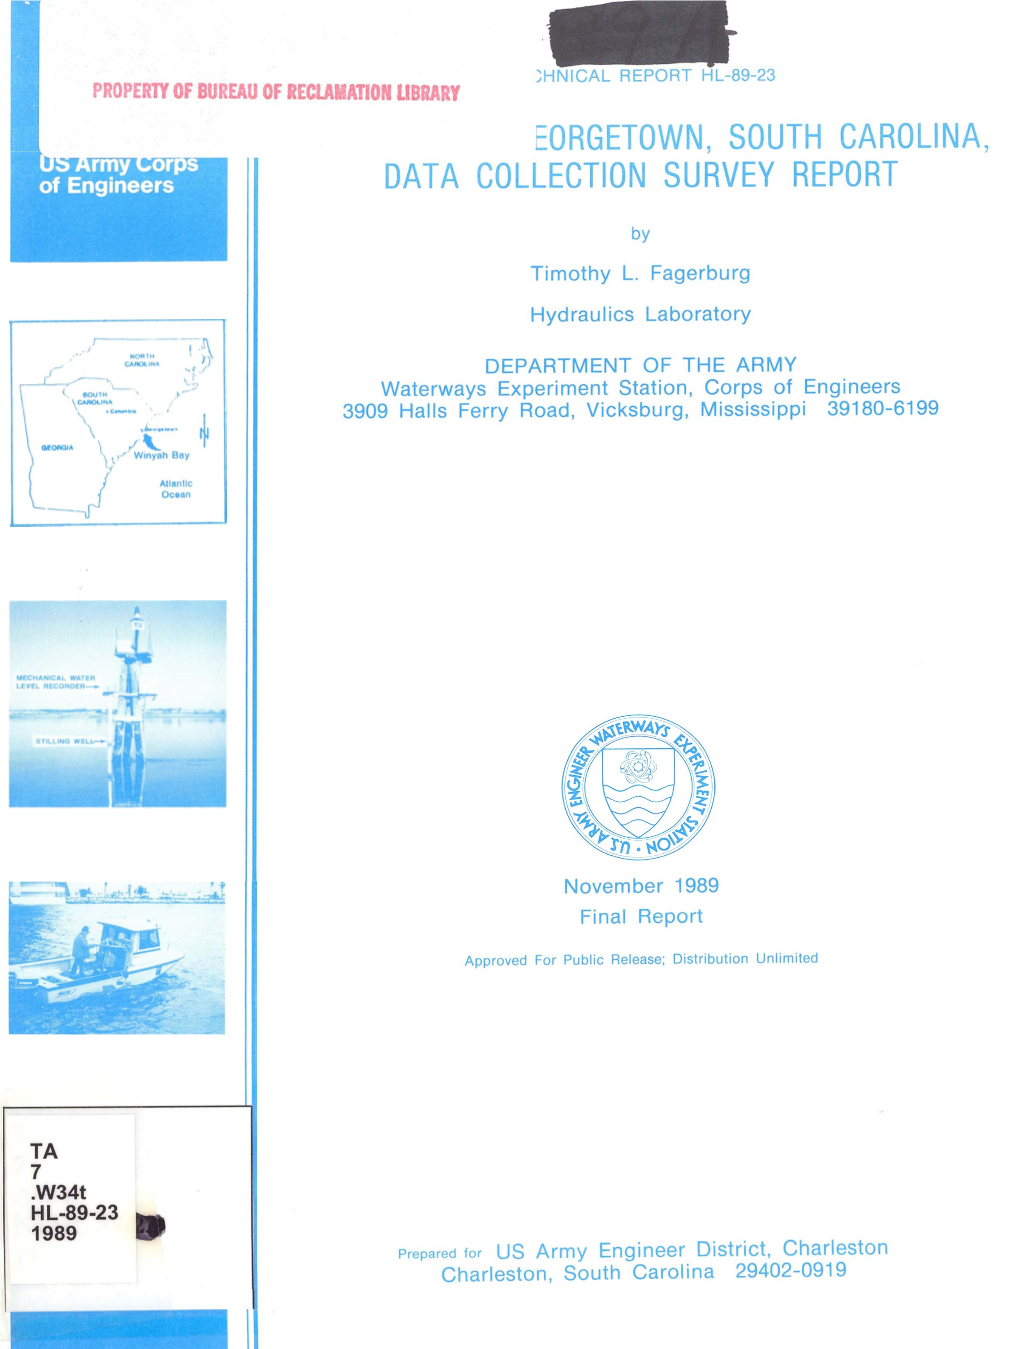 Winyah Bay, Georgetown, South Carolina, Data Collection Survey Report 12